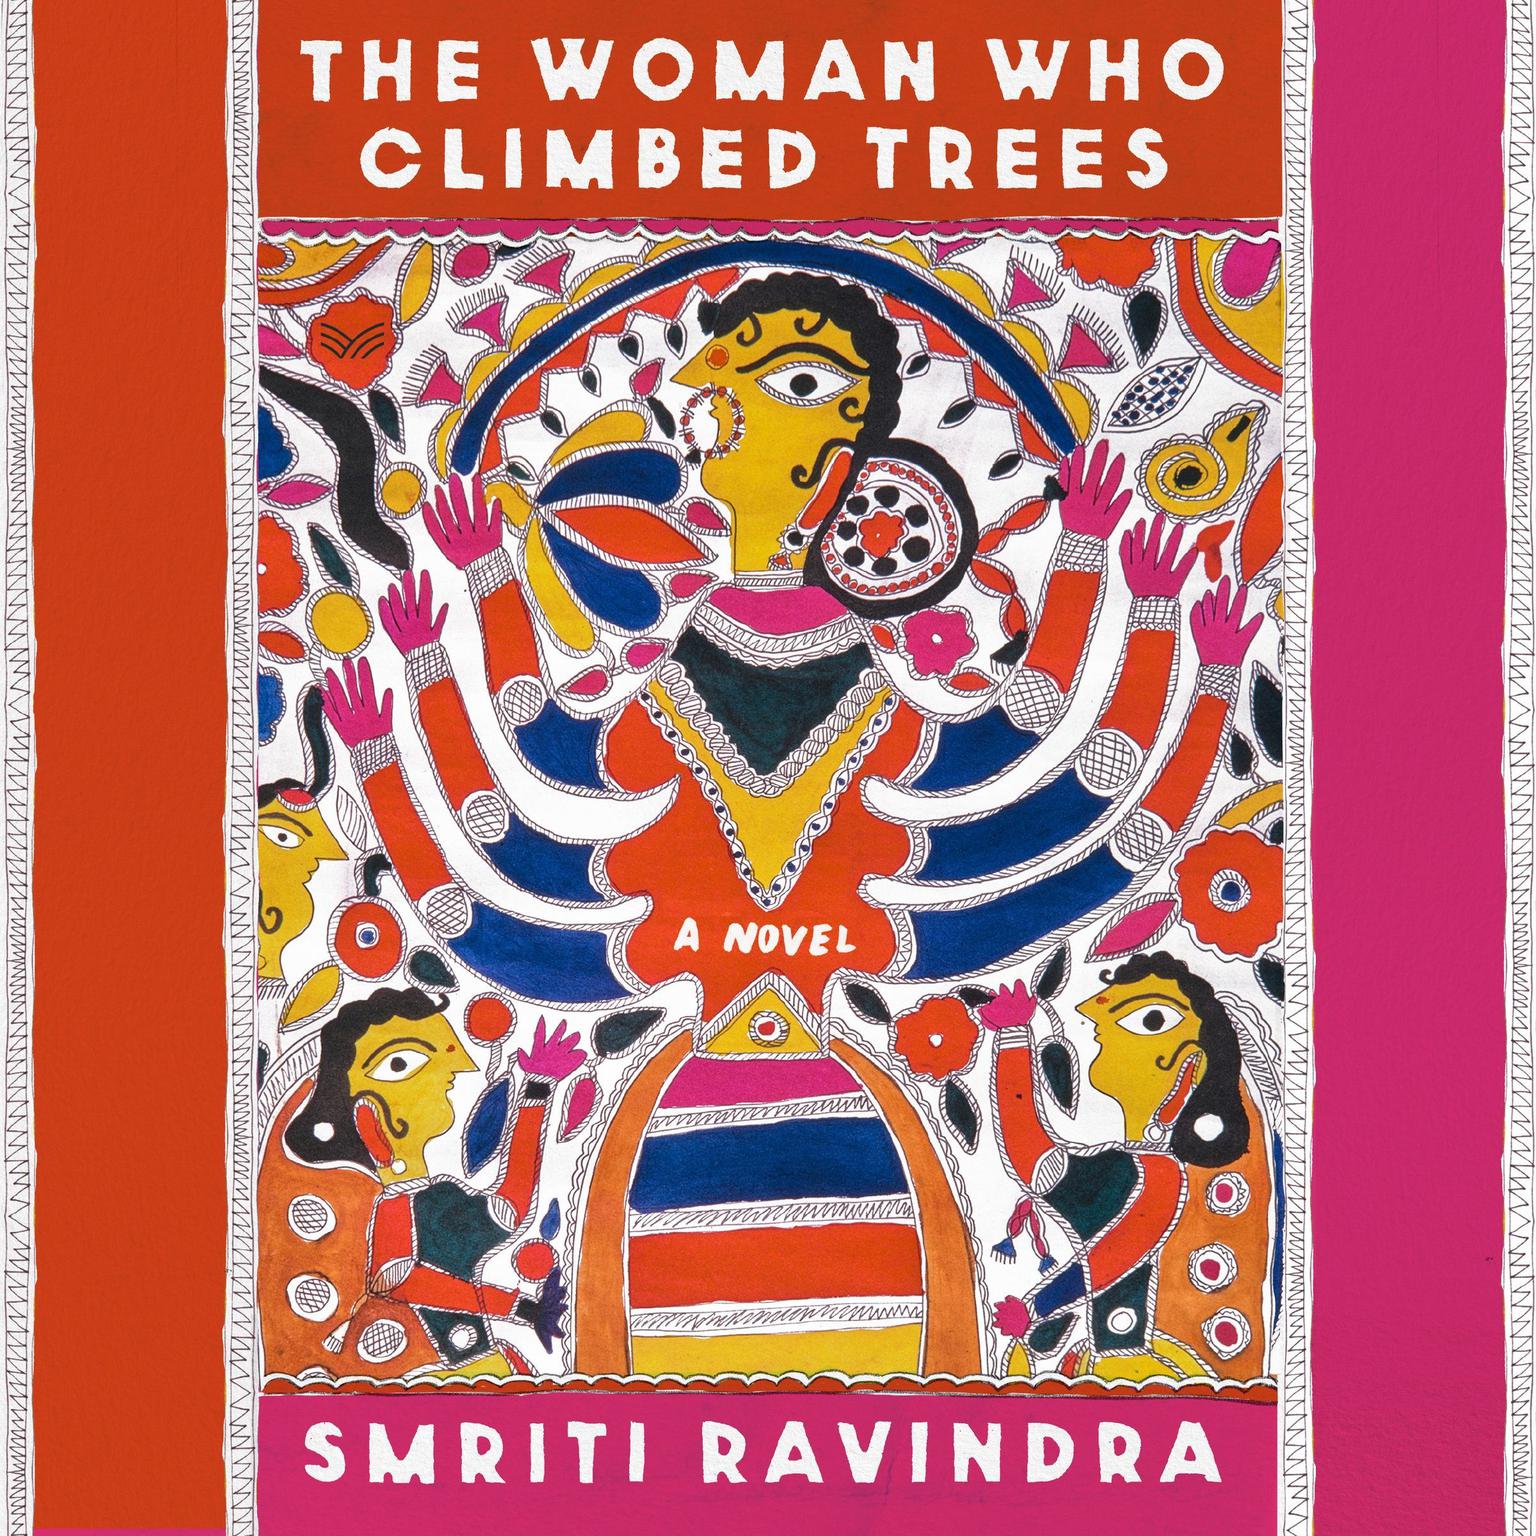 The Woman Who Climbed Trees: A Novel Audiobook, by Smriti Ravindra